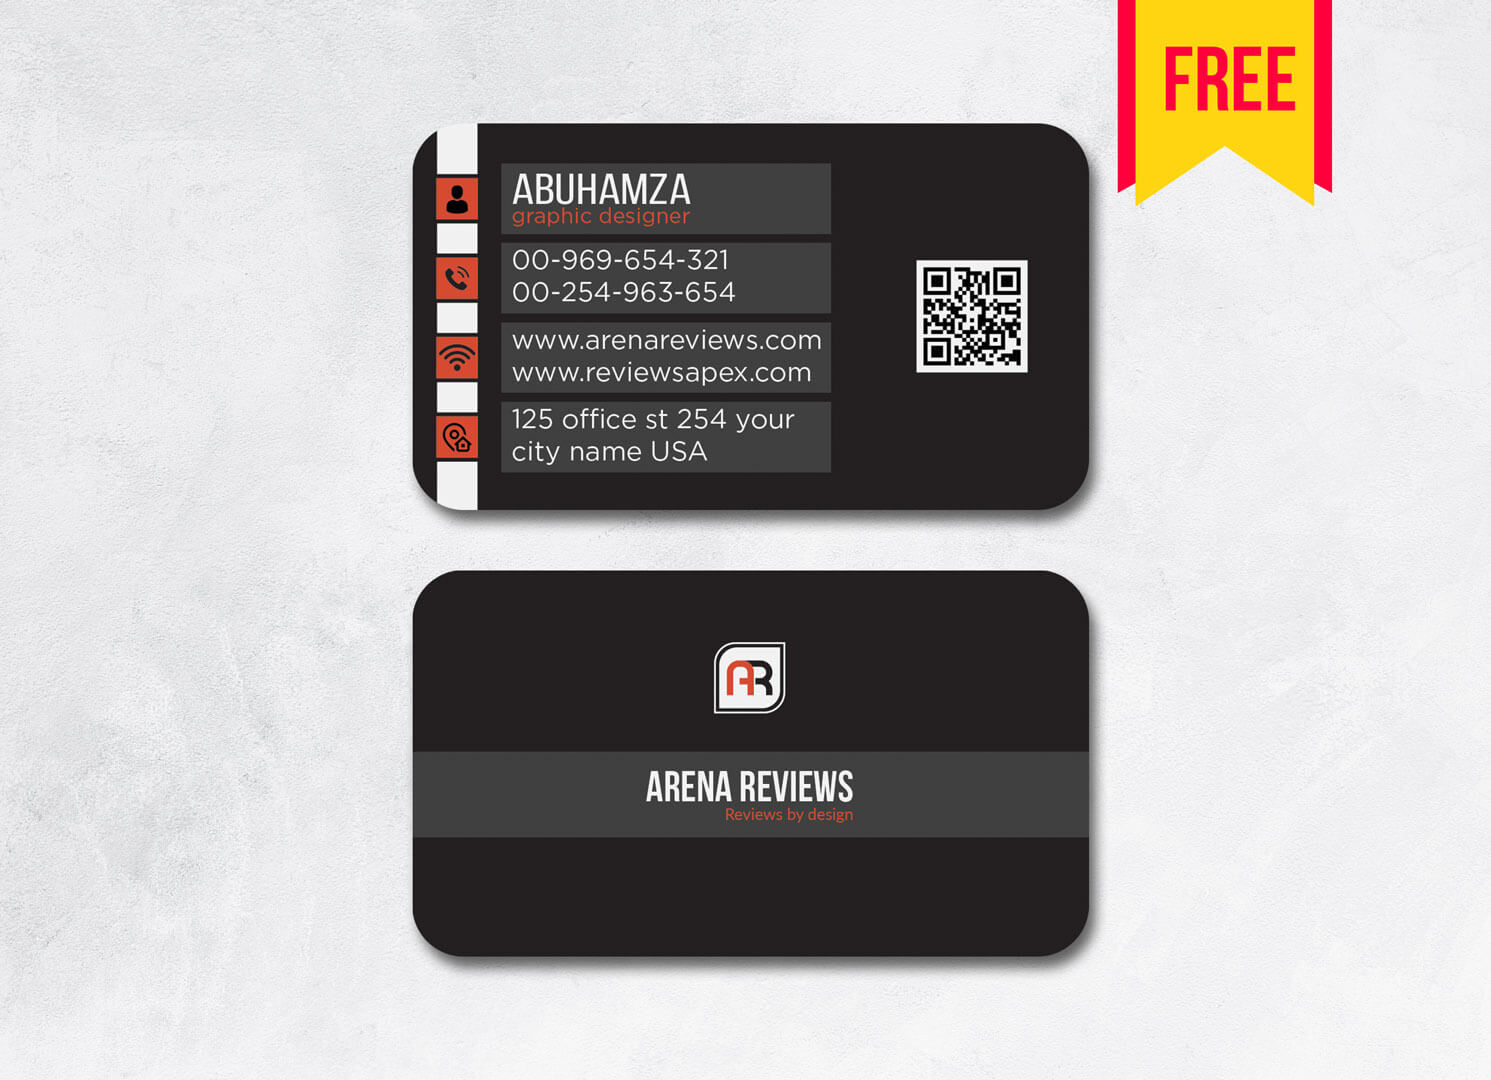 Dark Business Card Template Psd File | Free Download Within Photoshop Cs6 Business Card Template